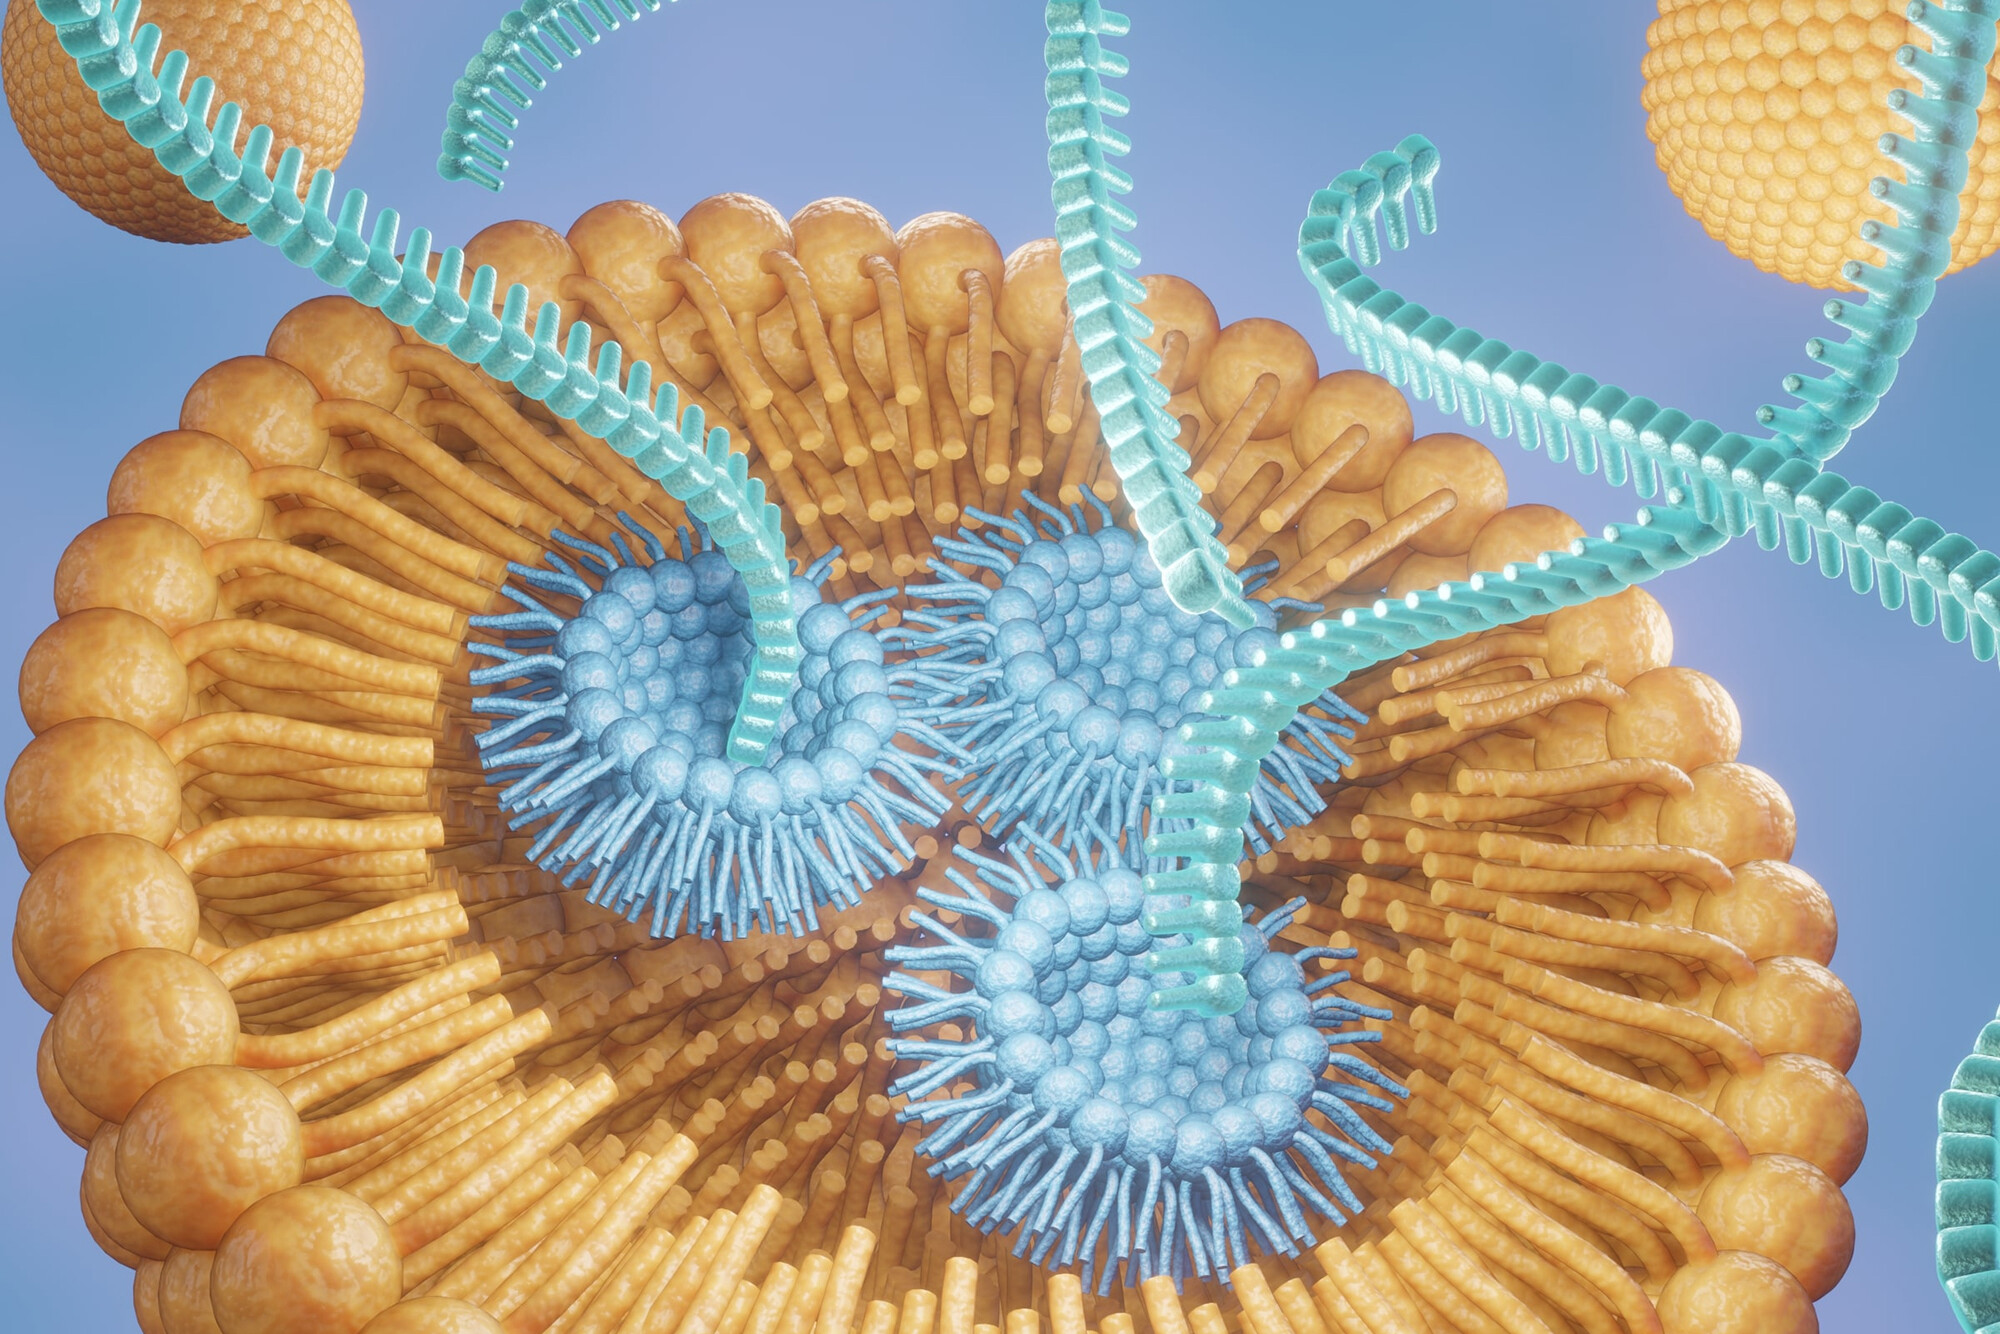 Microscopic view of lipid nanoparticles.